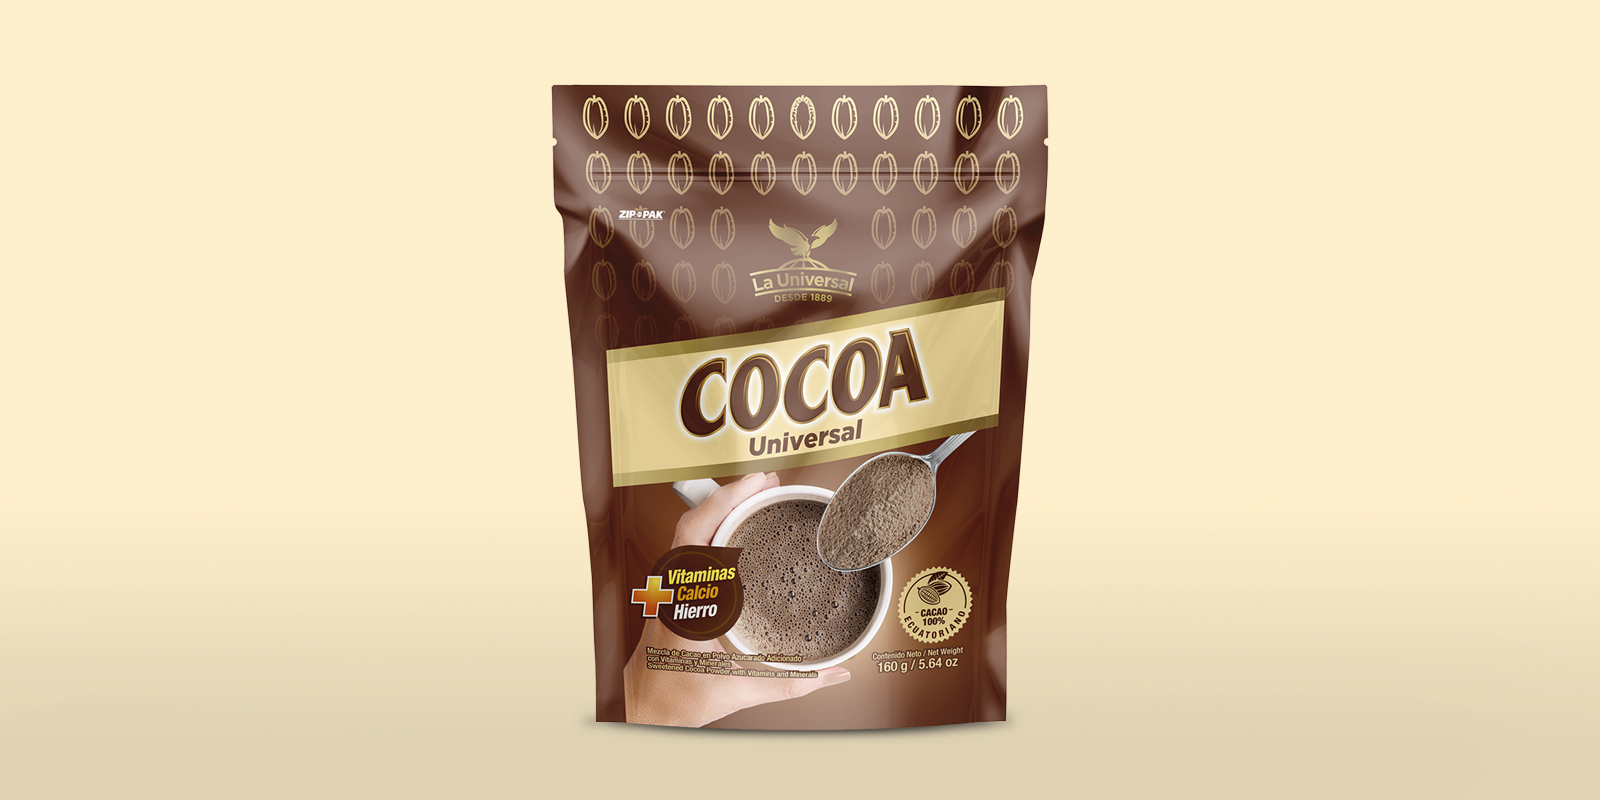 Cocoa La Universal – La Universal